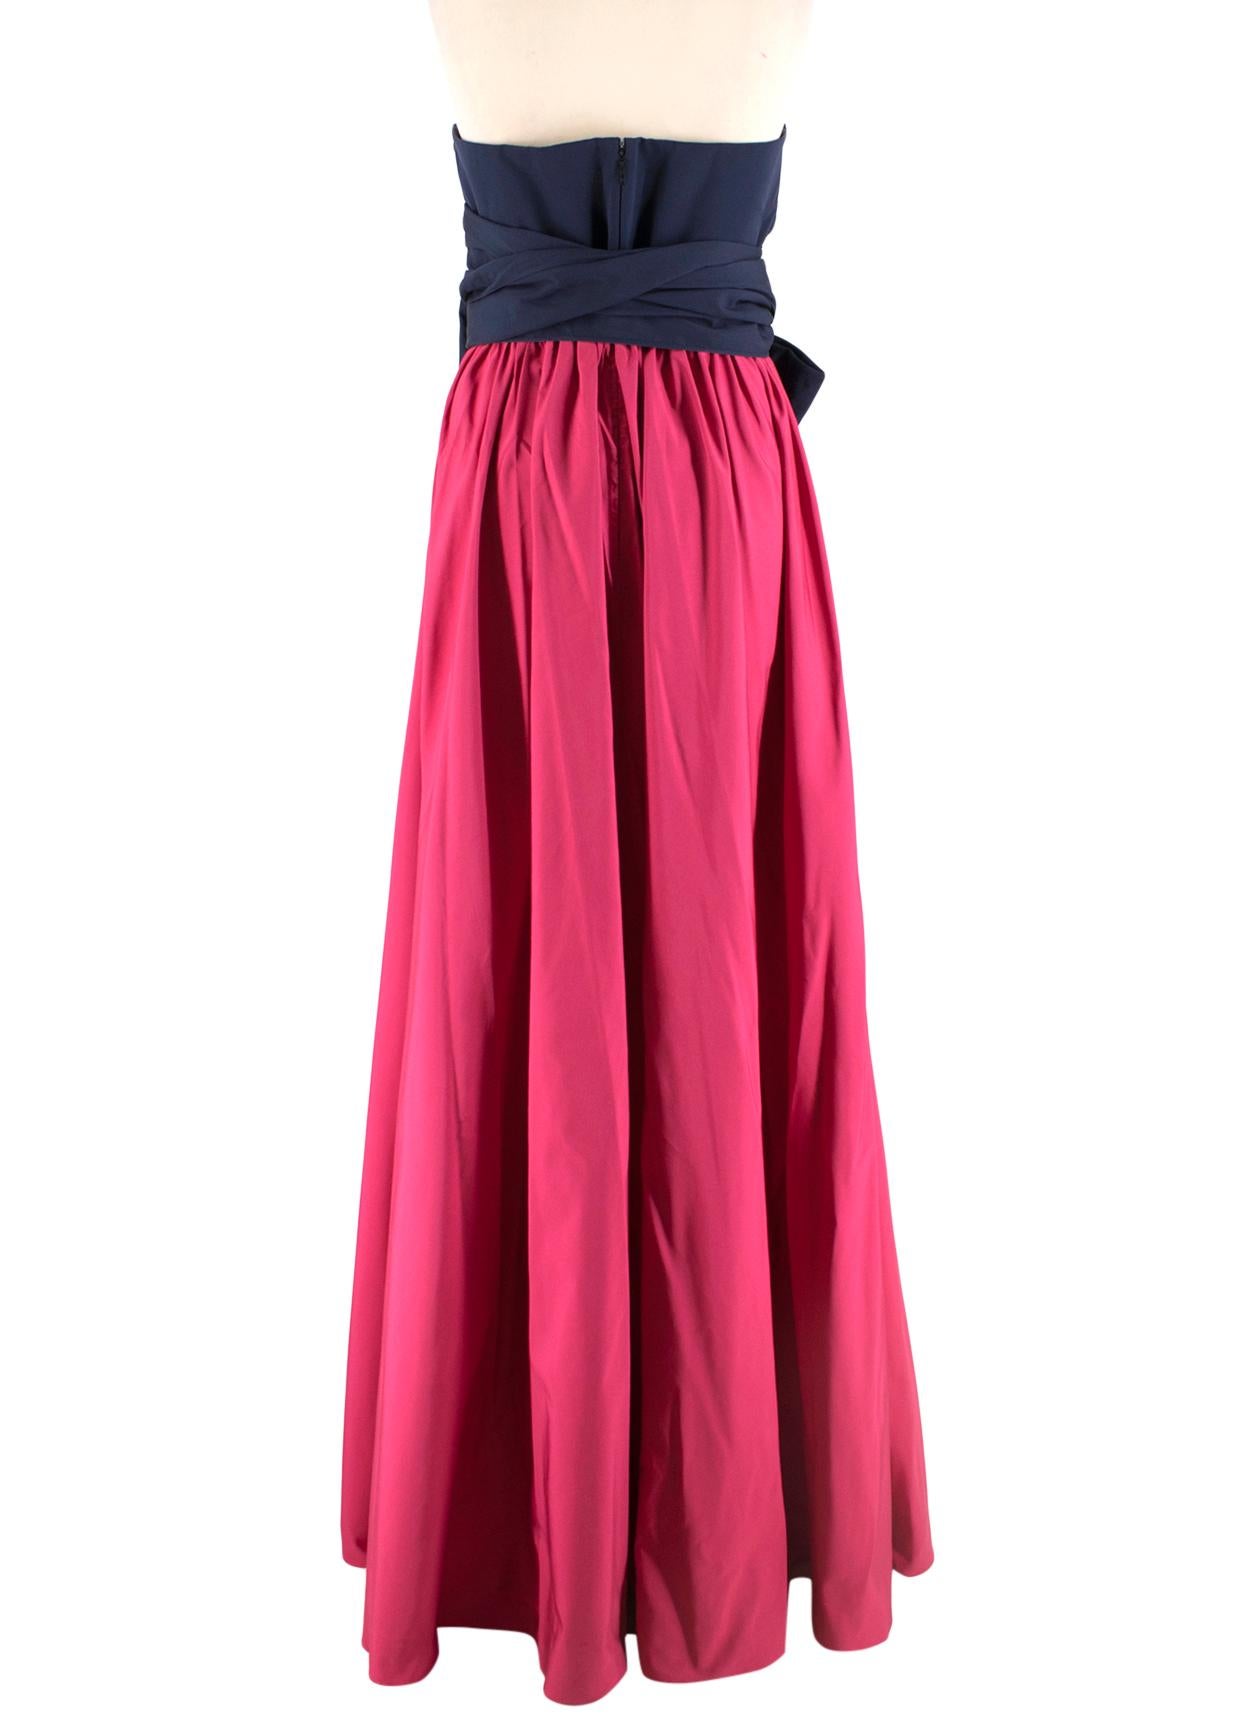 Carolina Herrera Navy & Pink Strapless Bow Tie Gown SIZE S 3